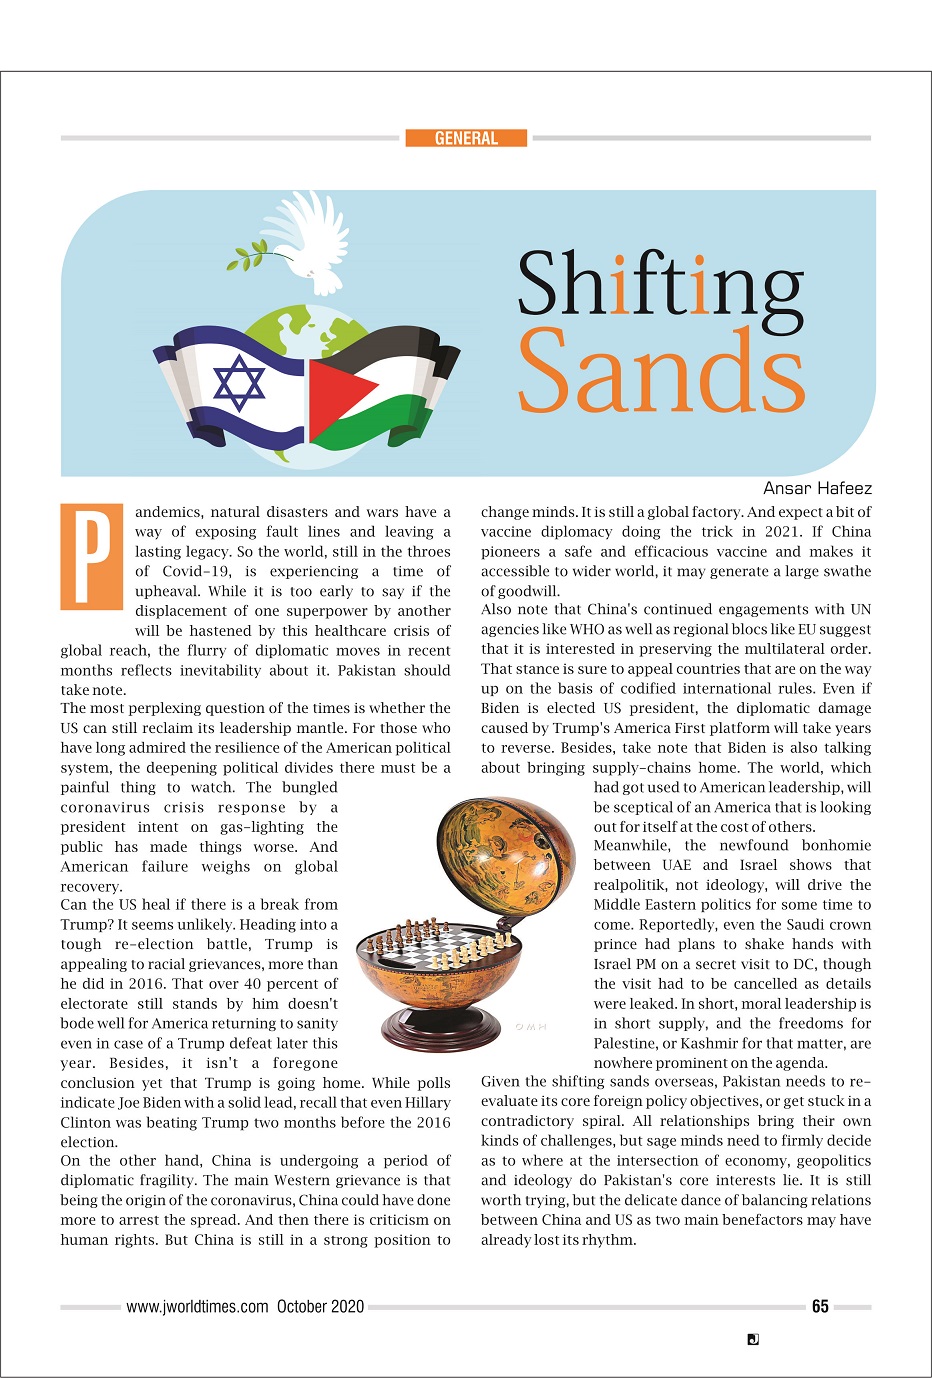 Shifting sands